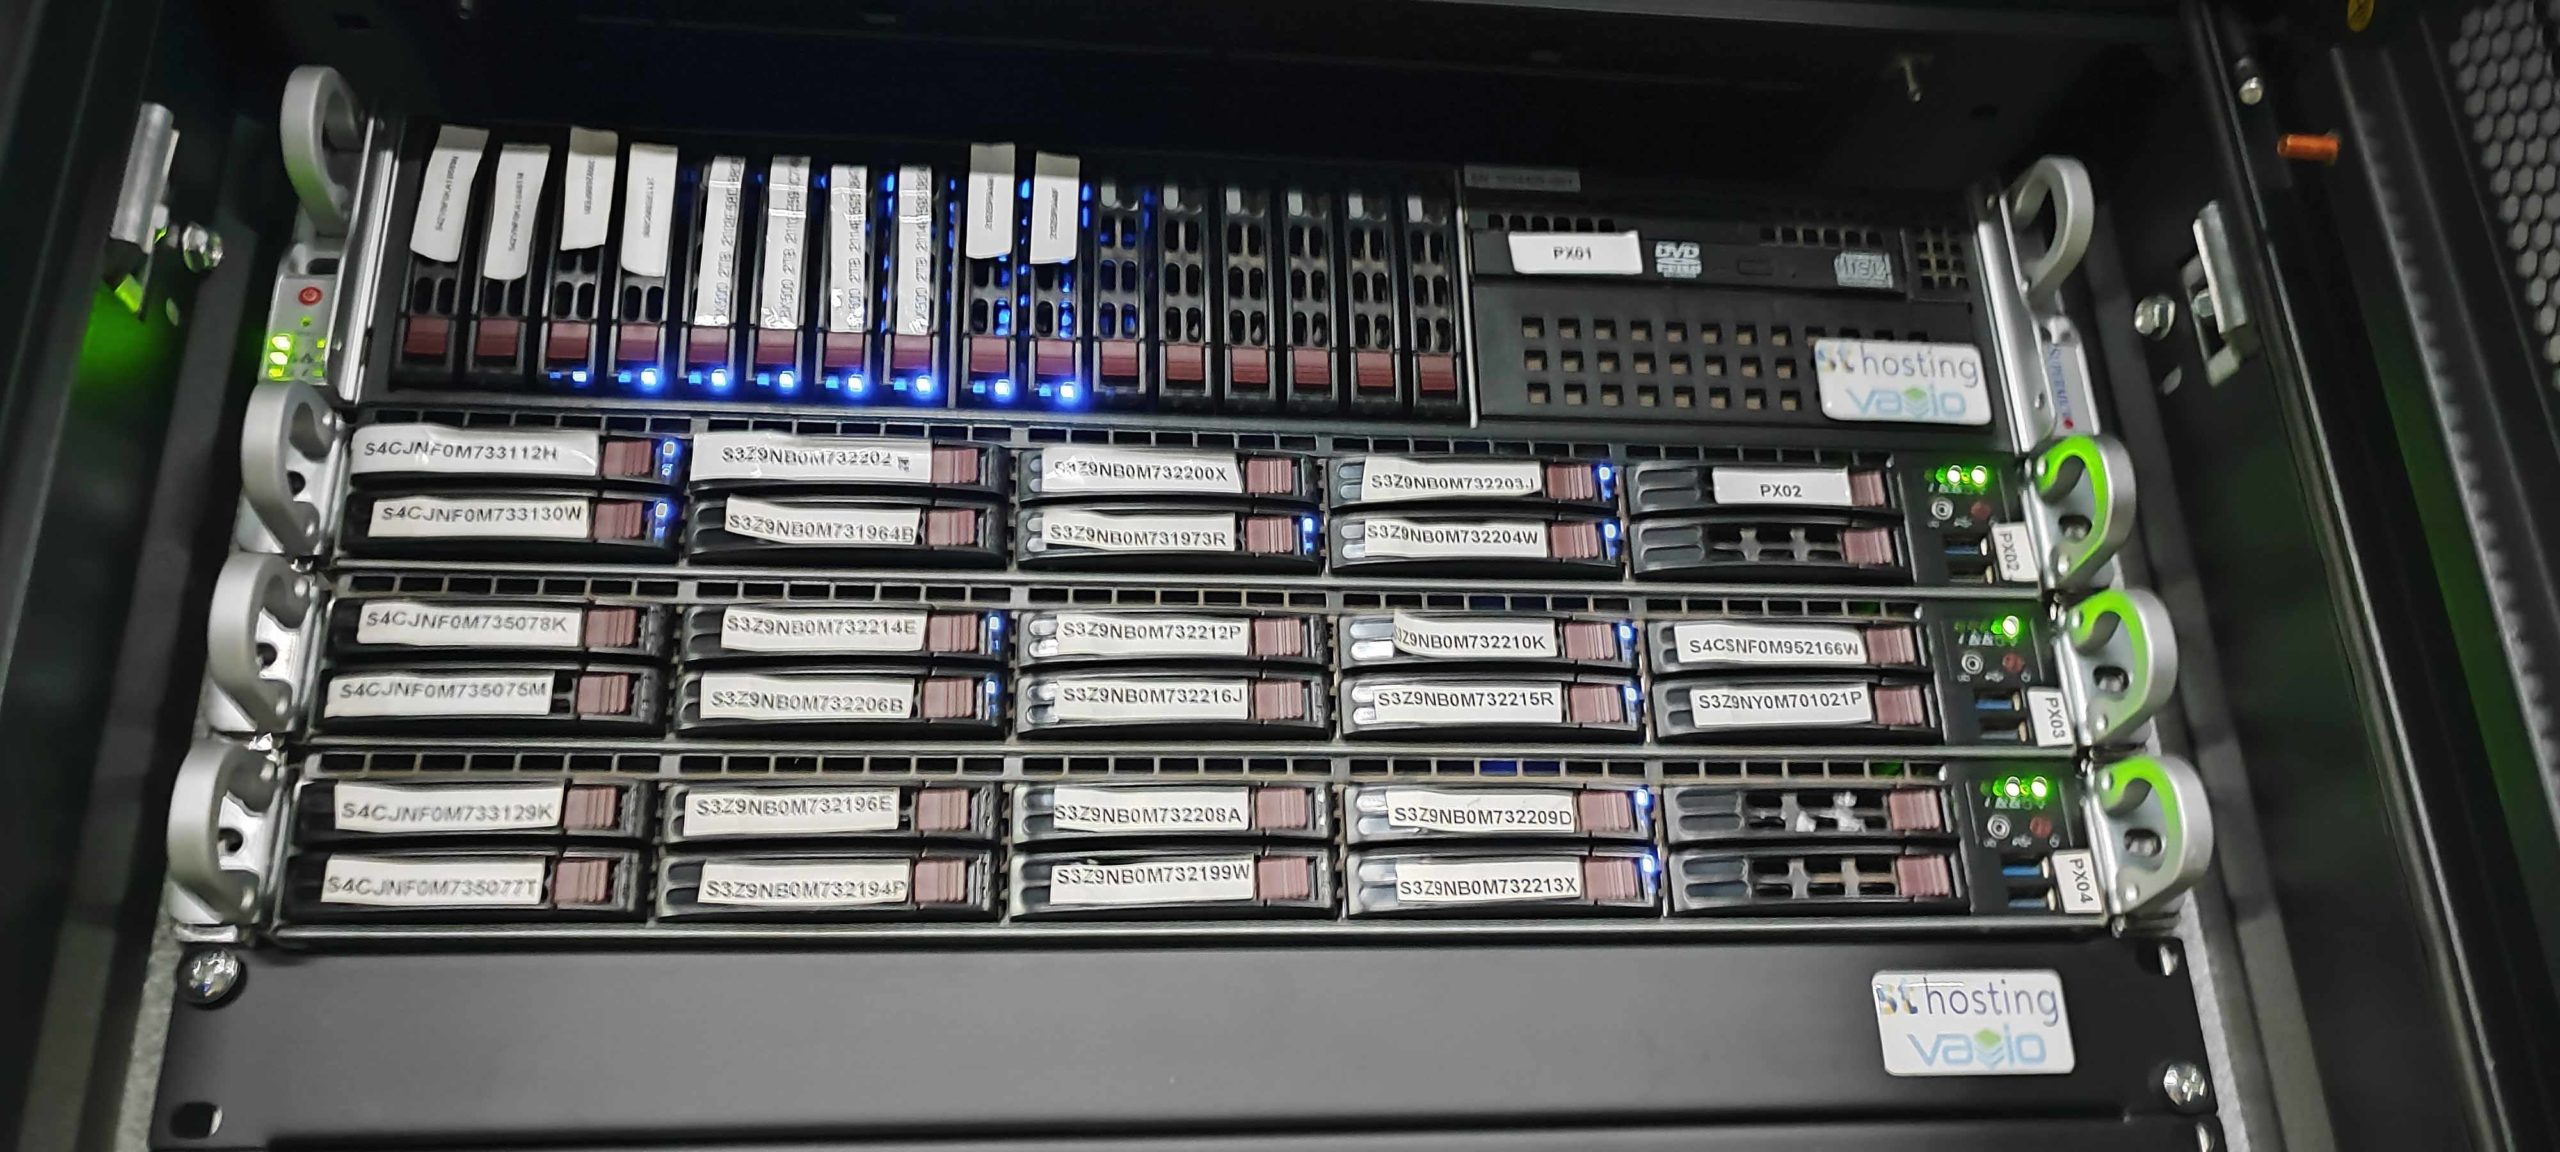 Server rack signal transmitter hosting